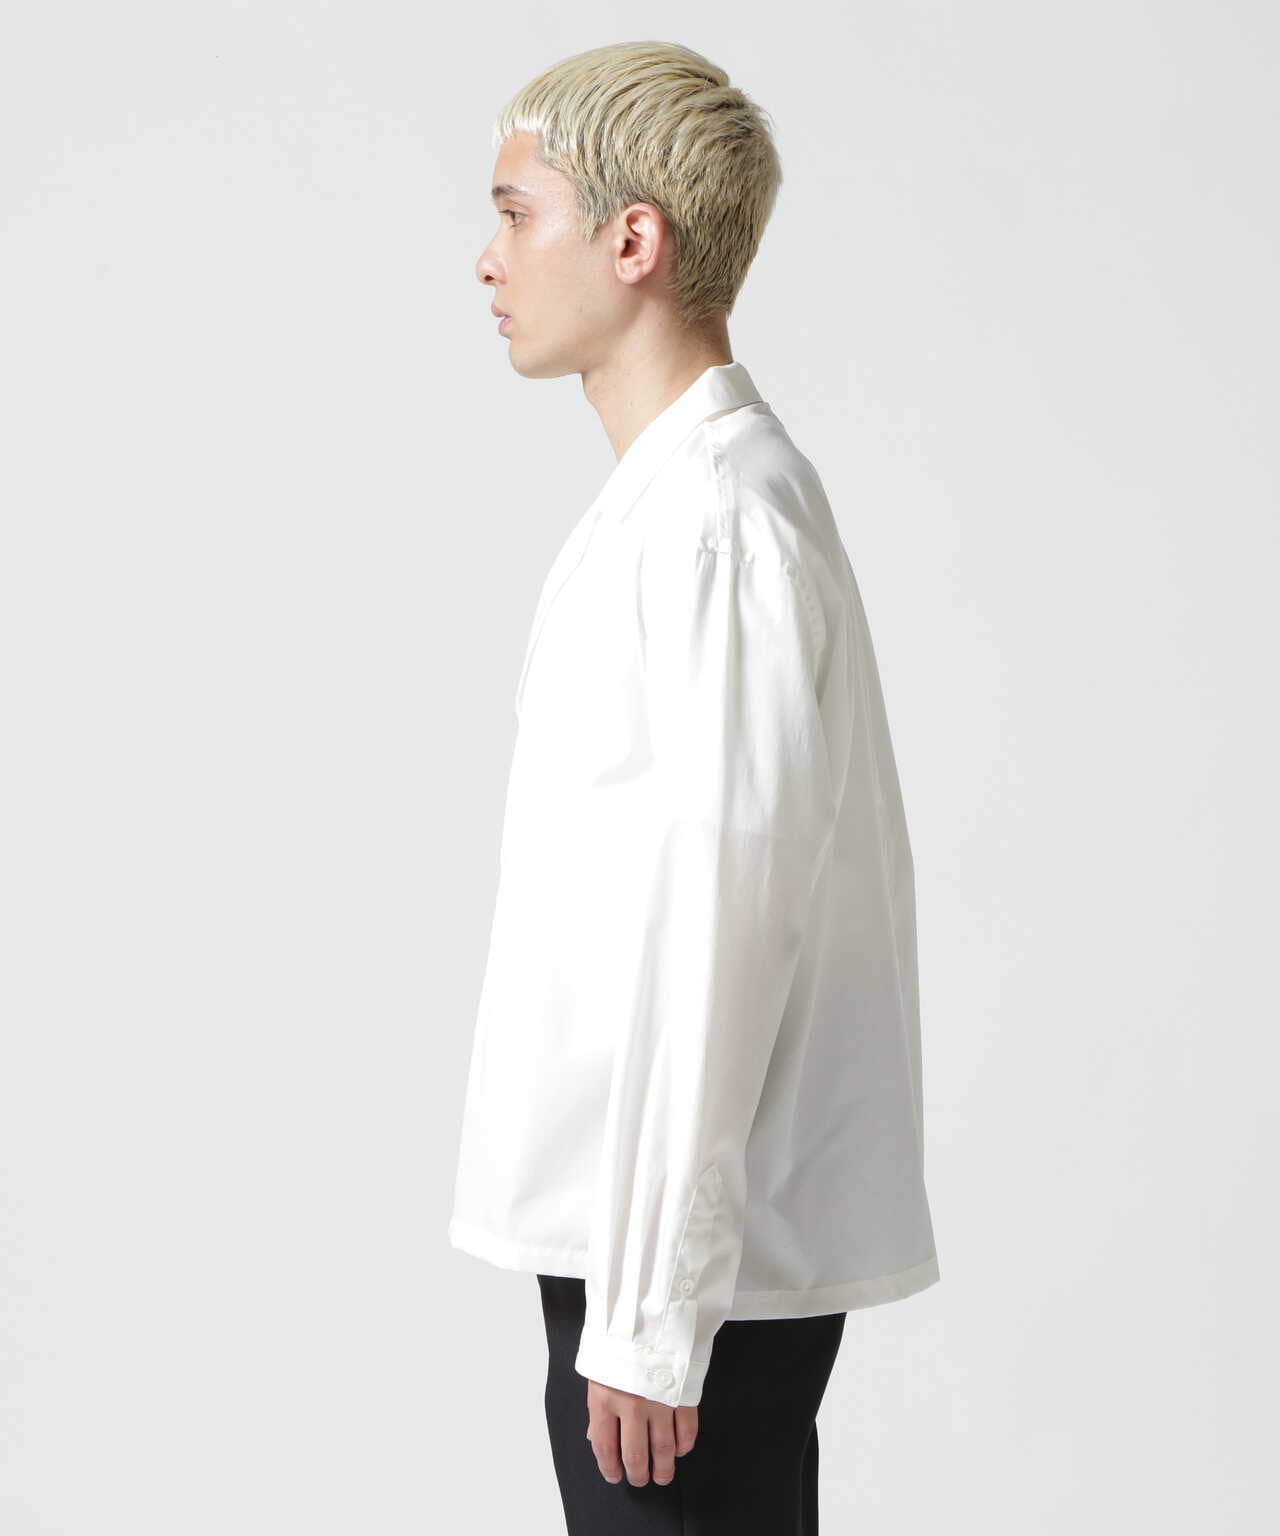 Toironier/トワロニエ/Shirt Jacket/シャツジャケット